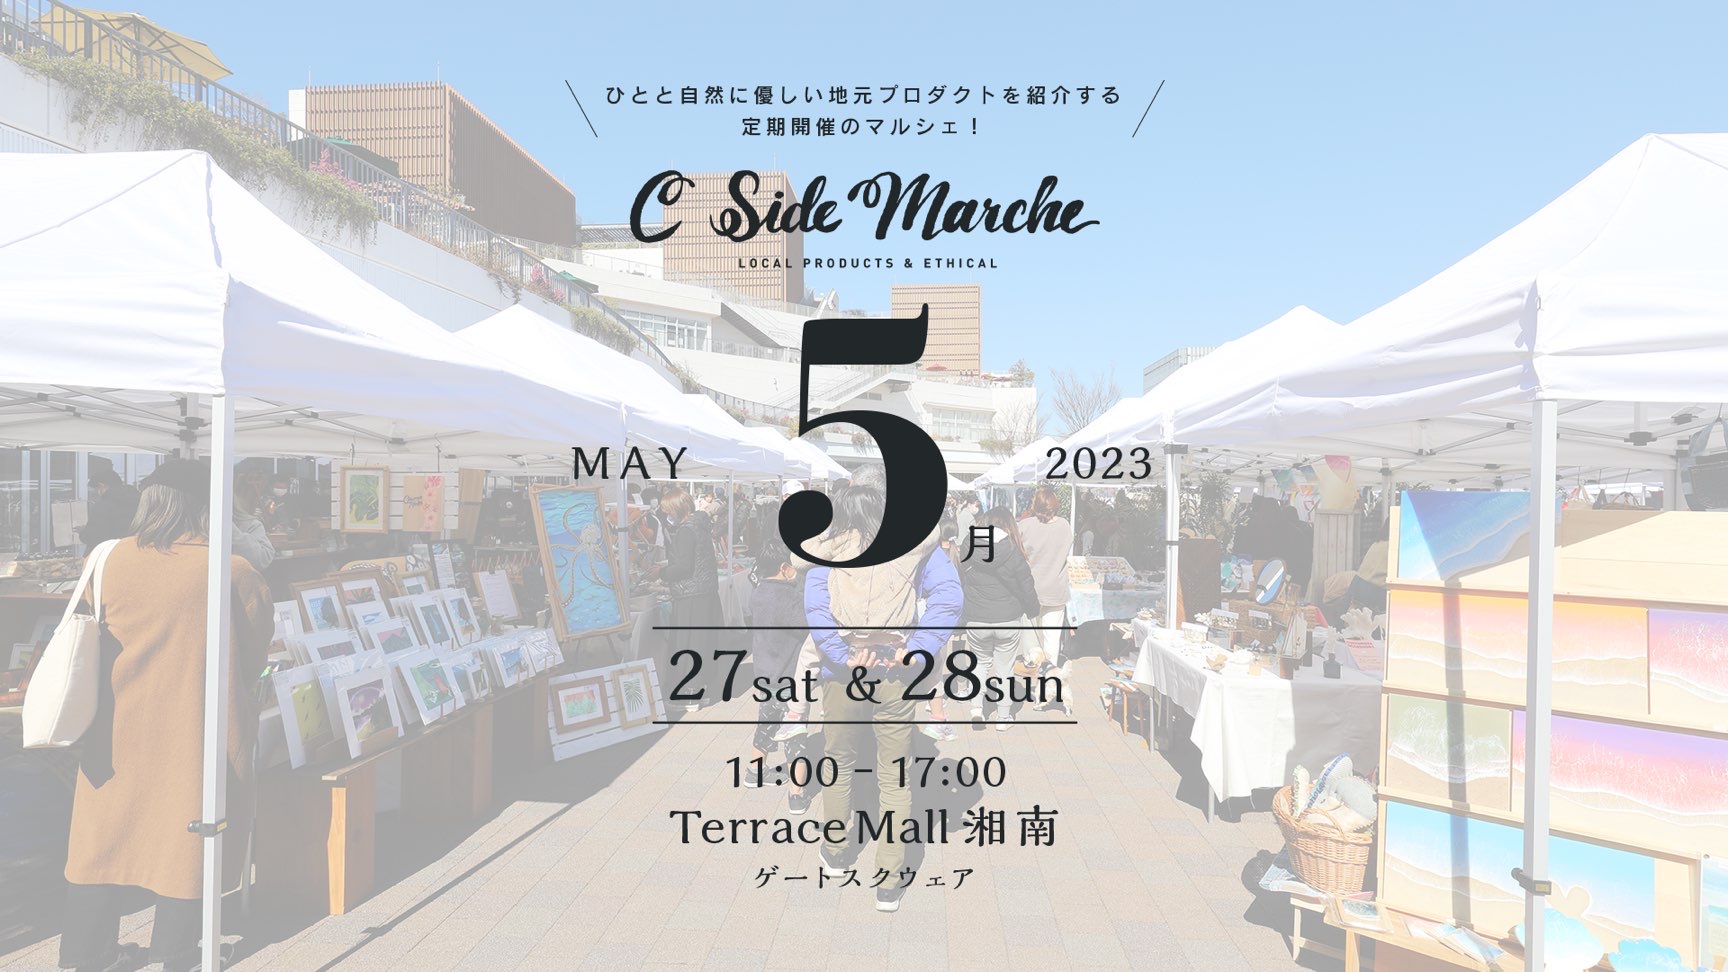 5/27(sat),28(sun) C Side Marche出店します🎪